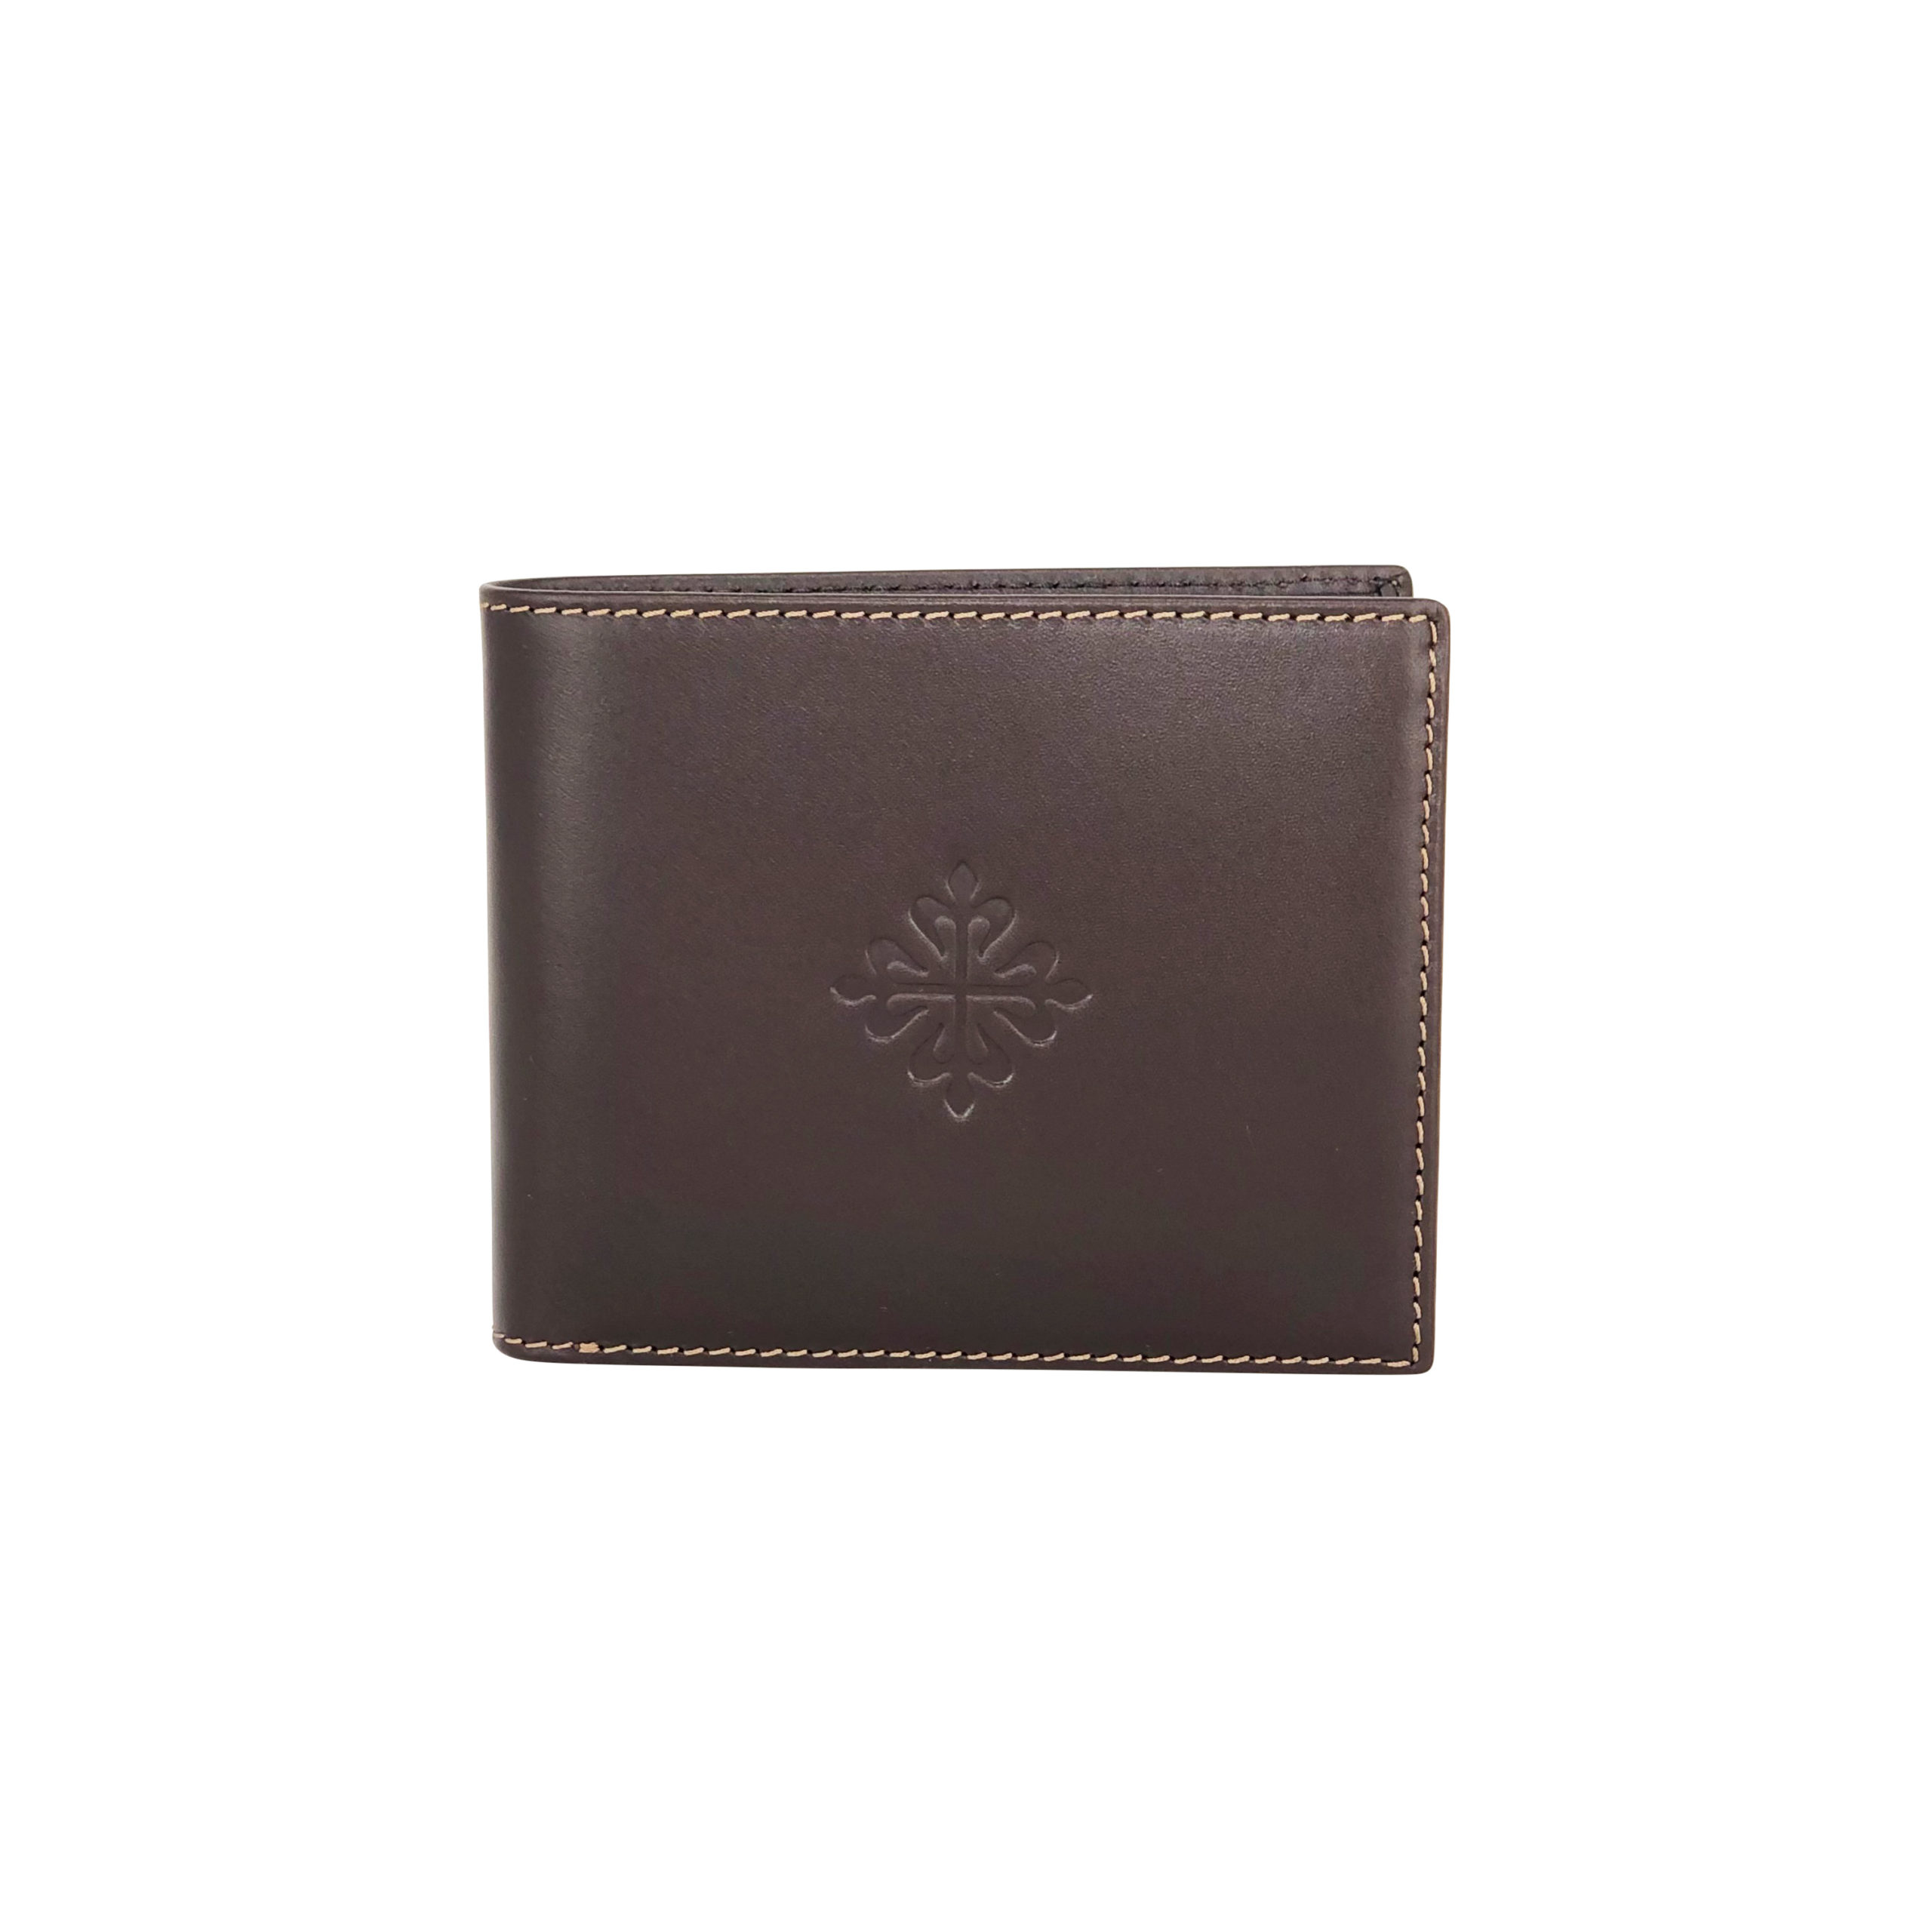 Patek Philippe wallet in brown leather - DOWNTOWN UPTOWN Genève